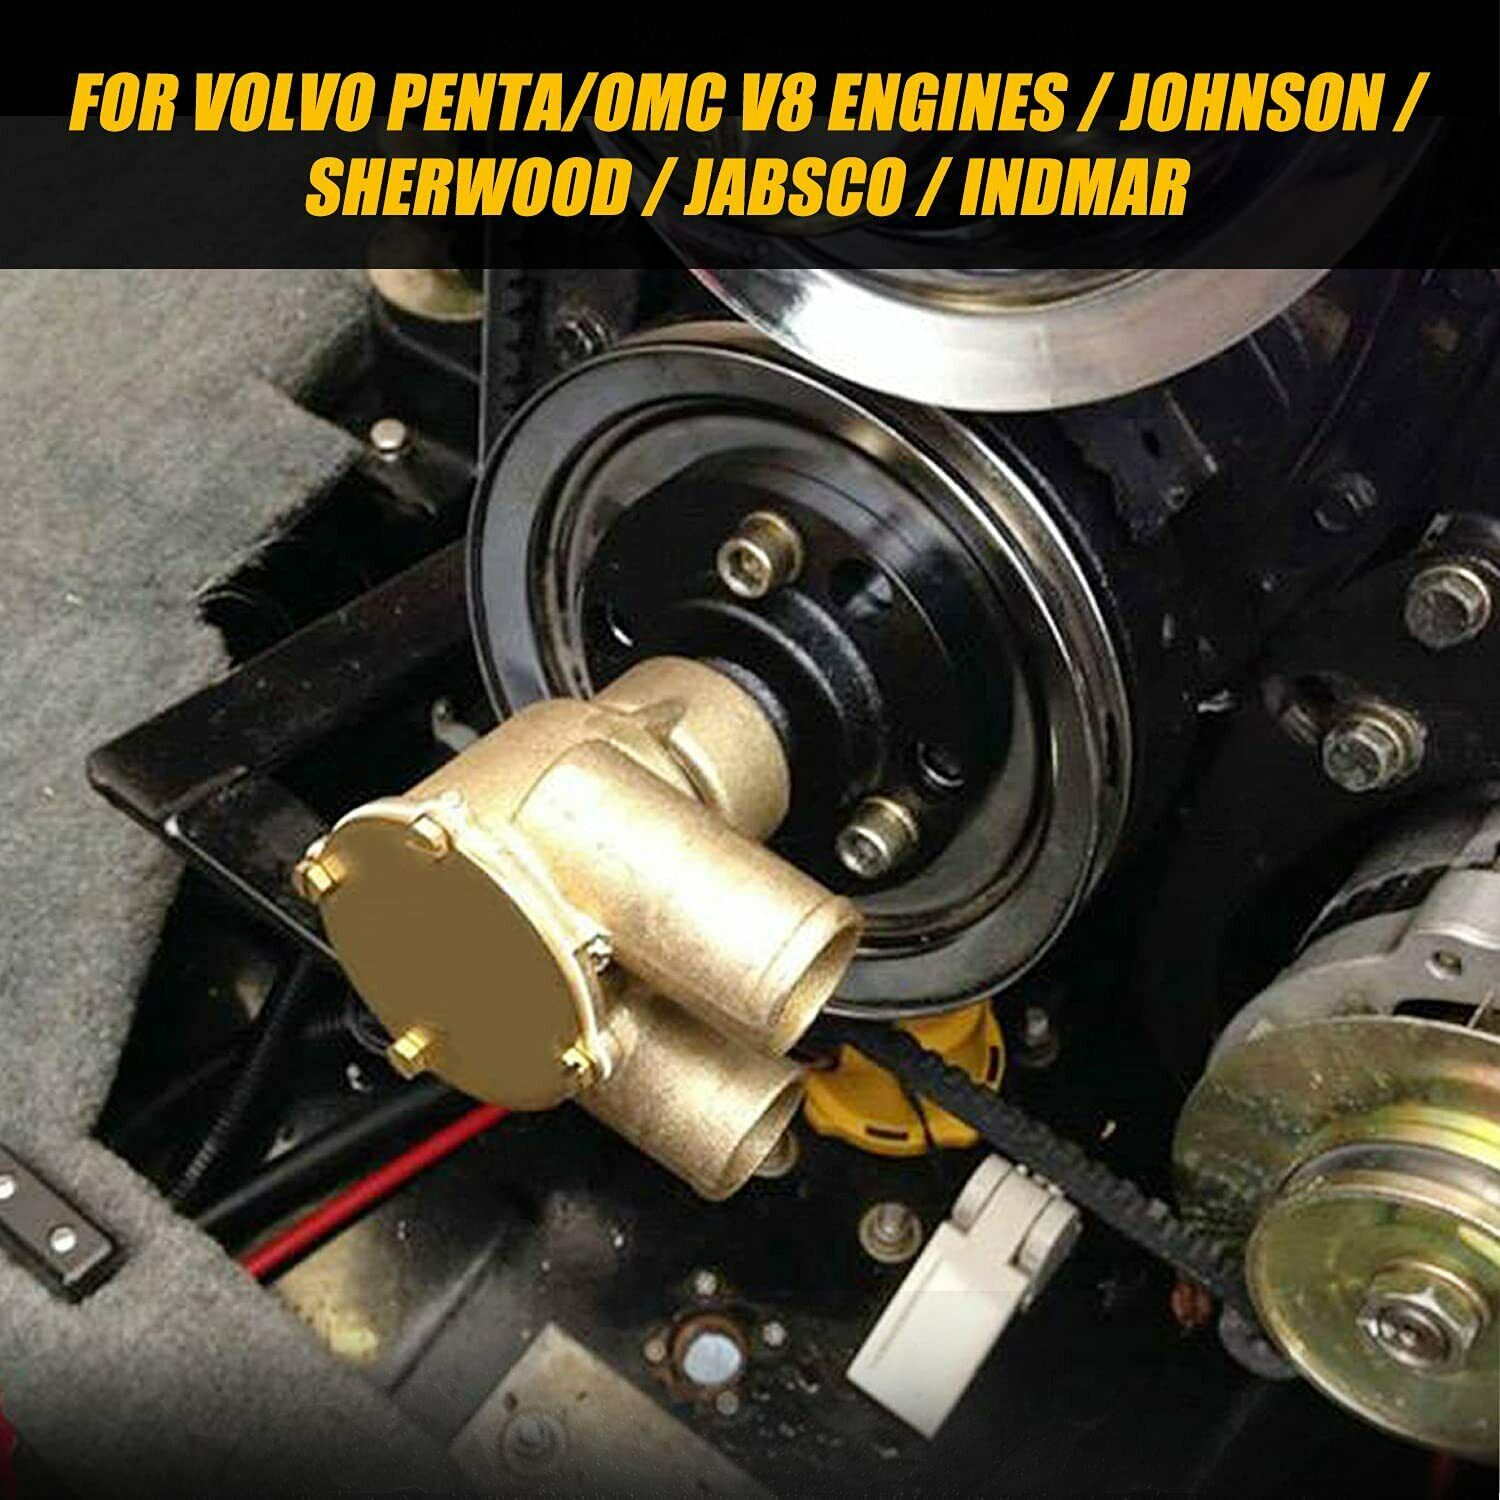 SouthMarine 09-808B 22405-0001 3586496 875583-7 21951342 500121 B 50021 33032 18-3076 Water Pump Impeller for Jabsco/Johnson/Volvo Penta Engine Pump Neoprene 